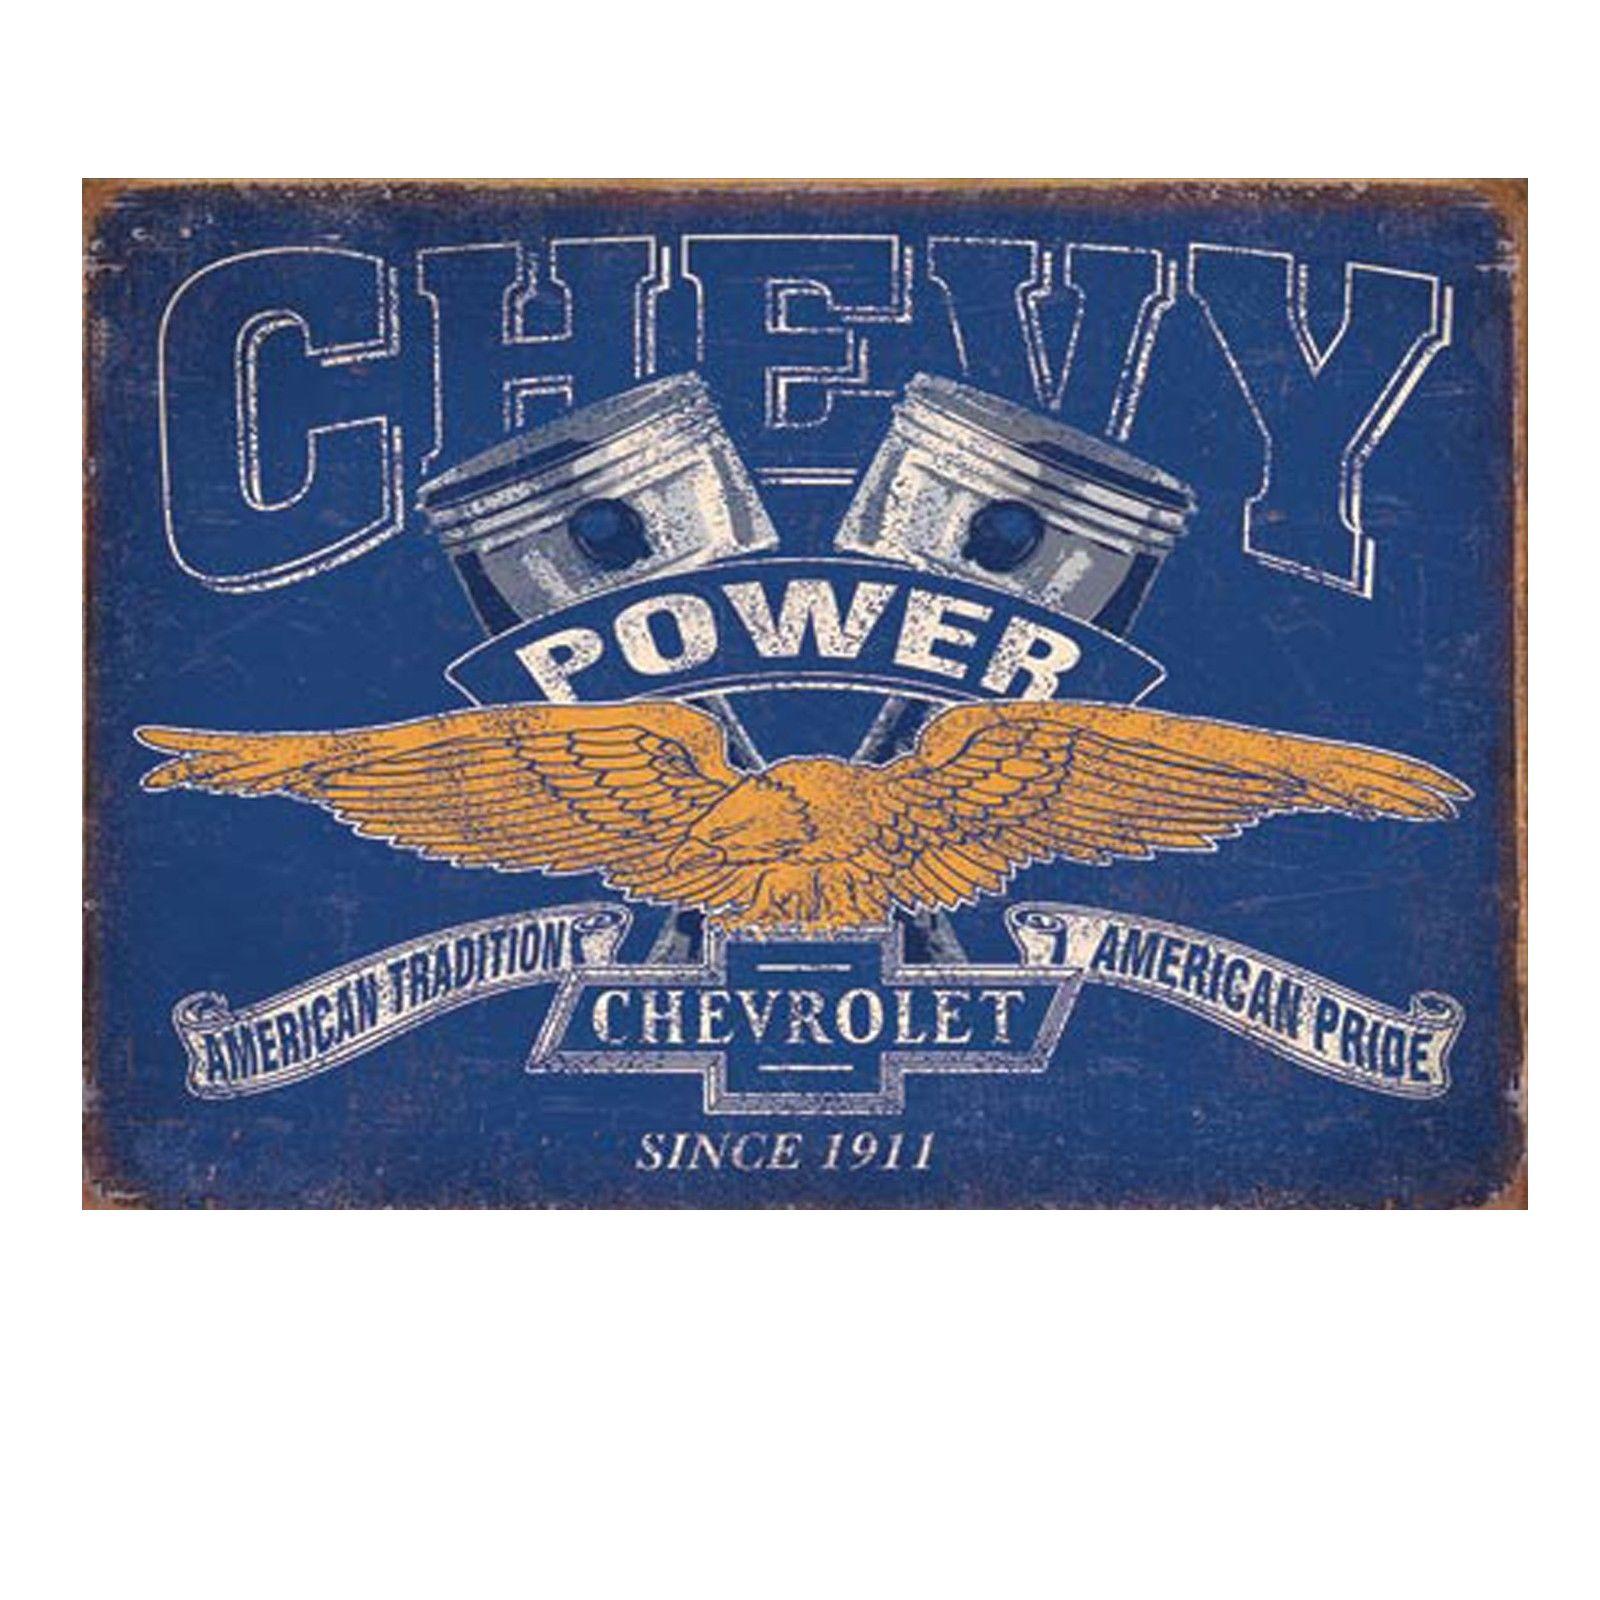 Chevrolet Garage Logo - Chevy Hotrod Metal Tin Wall Sign Plaque chevrolet Vintage Car Garage ...